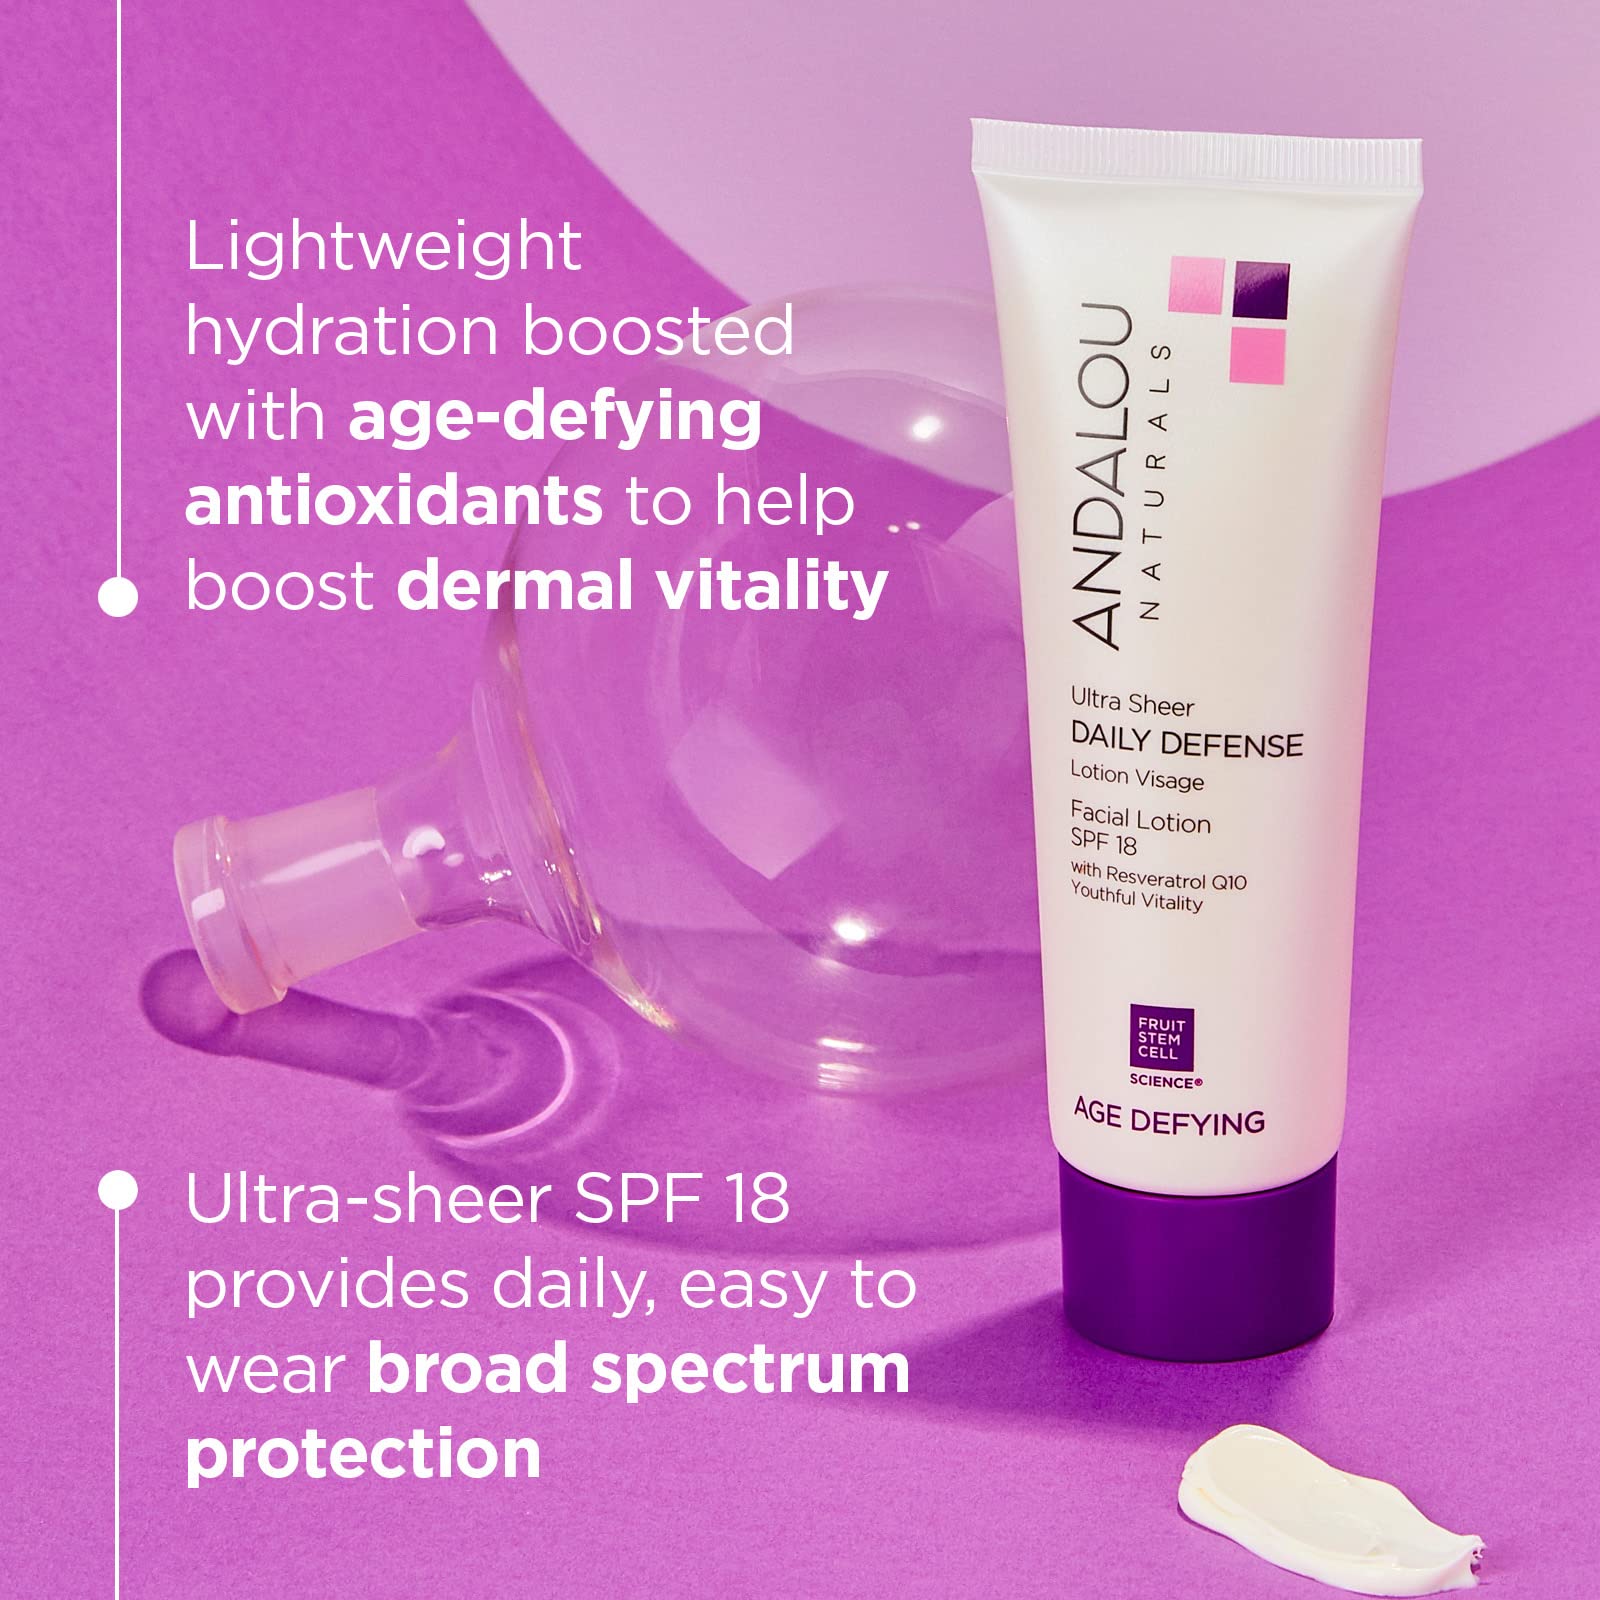 Andalou Naturals Ultra Sheer Daily Defense Facial Lotion, SPF 18, 2.7 oz, with Resveratrol CoQ10 and Antioxidants, Lightweight, Hydrating Facial Moisturizer